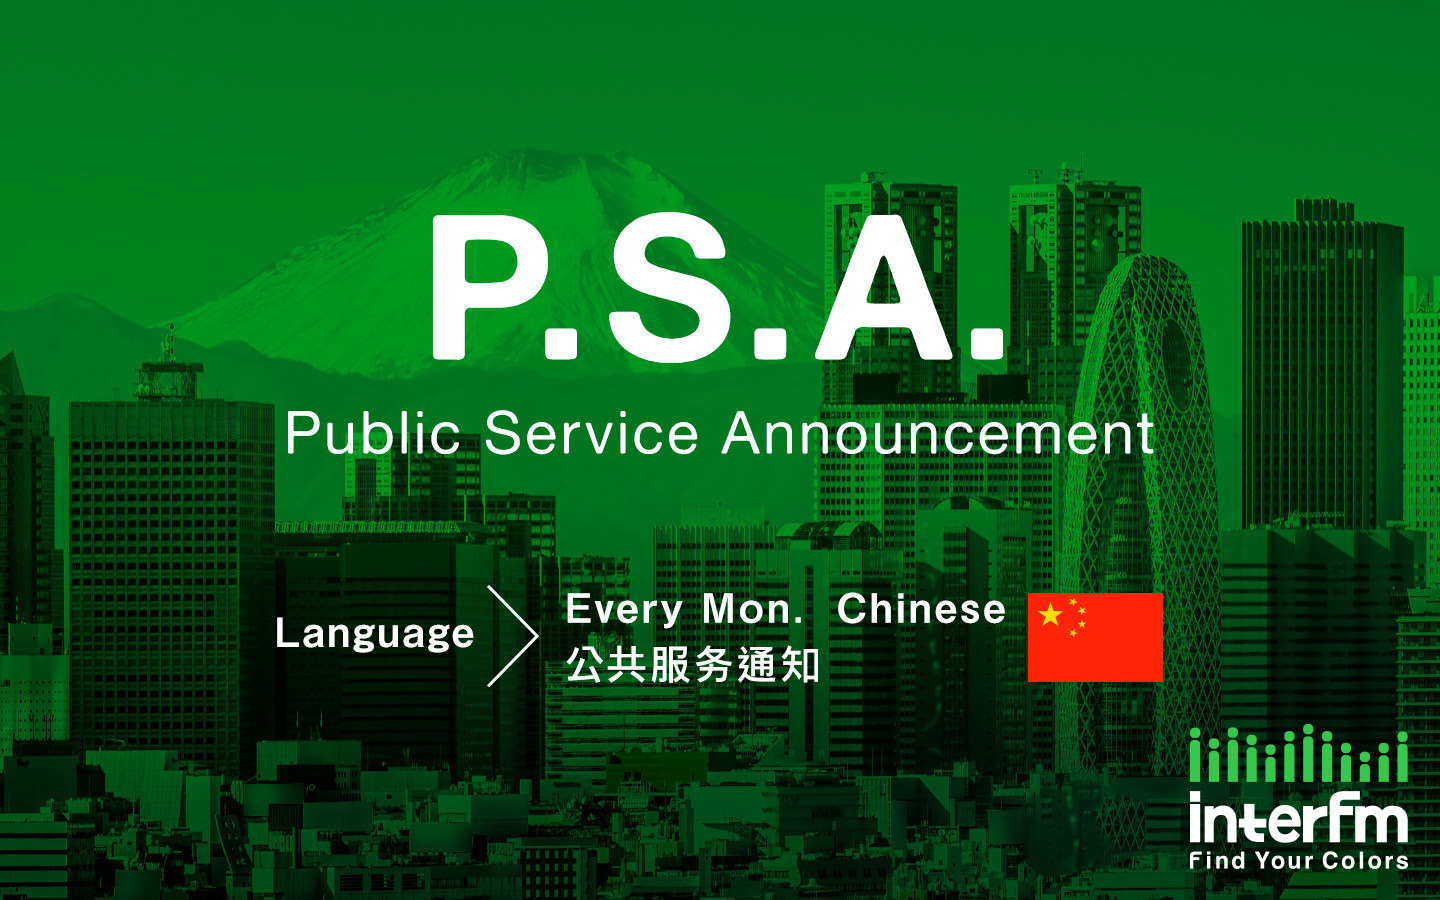 公共服务通知 - Public Service Announcement (中文 - Chinese)